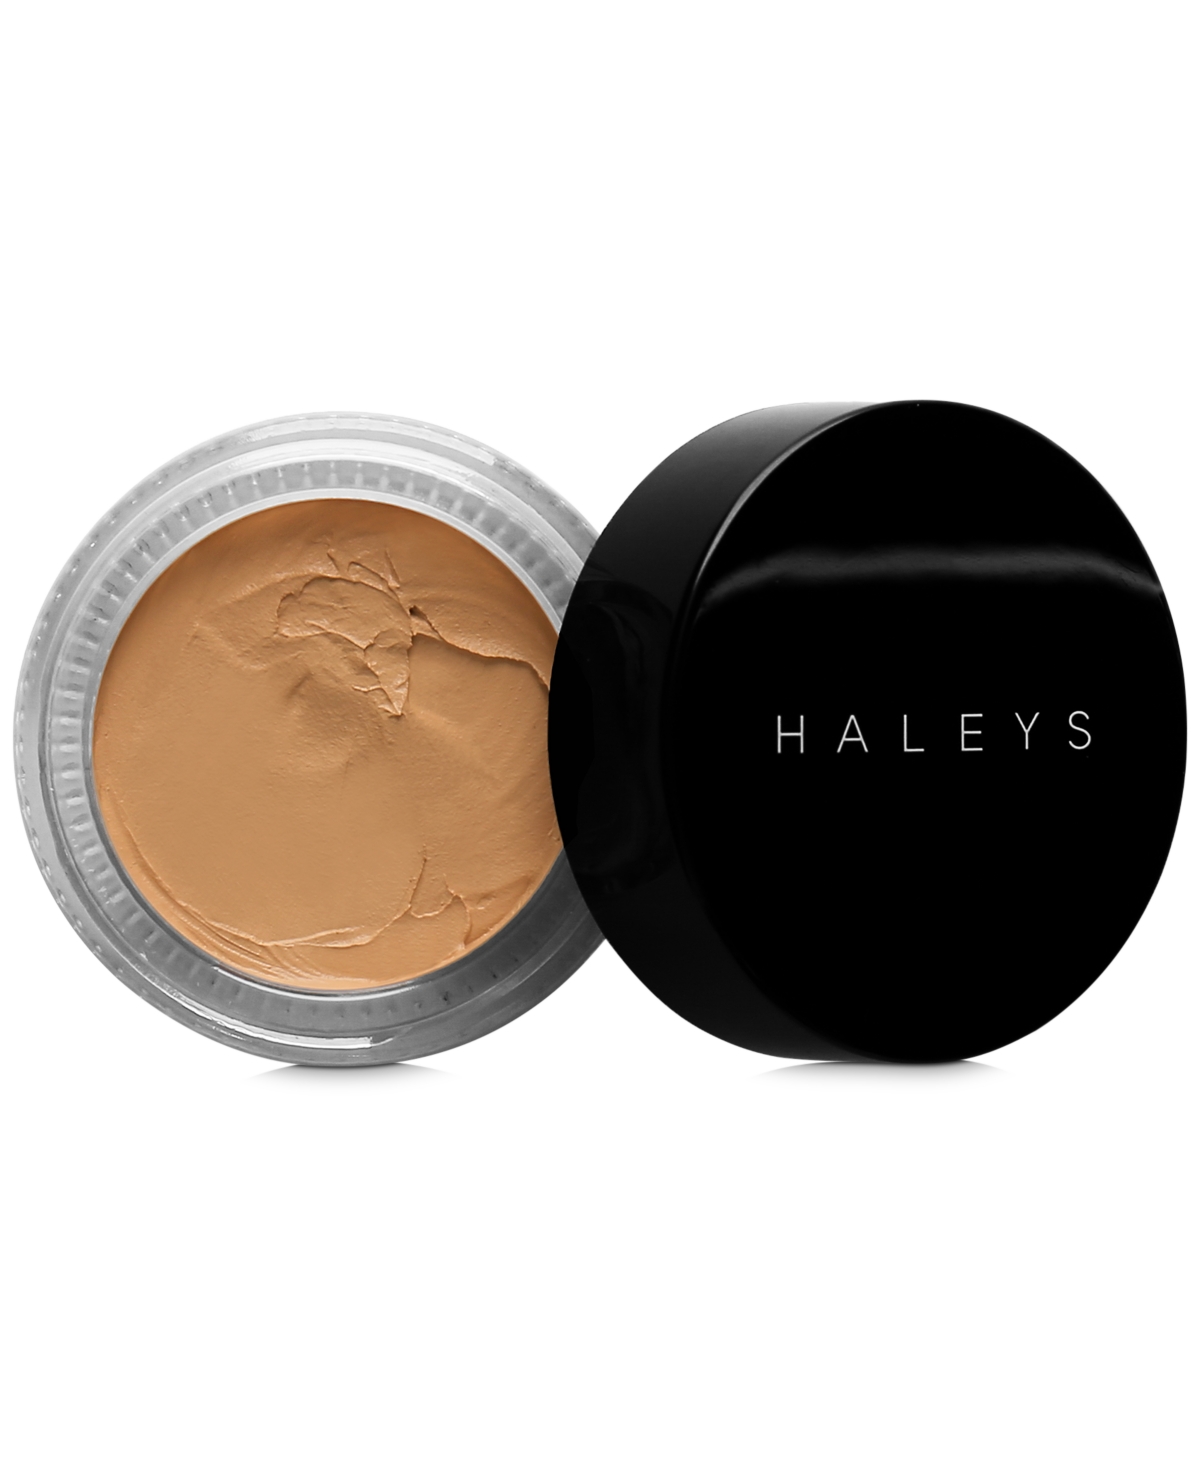 Haleys Beauty Re:Veal Mousse Makeup